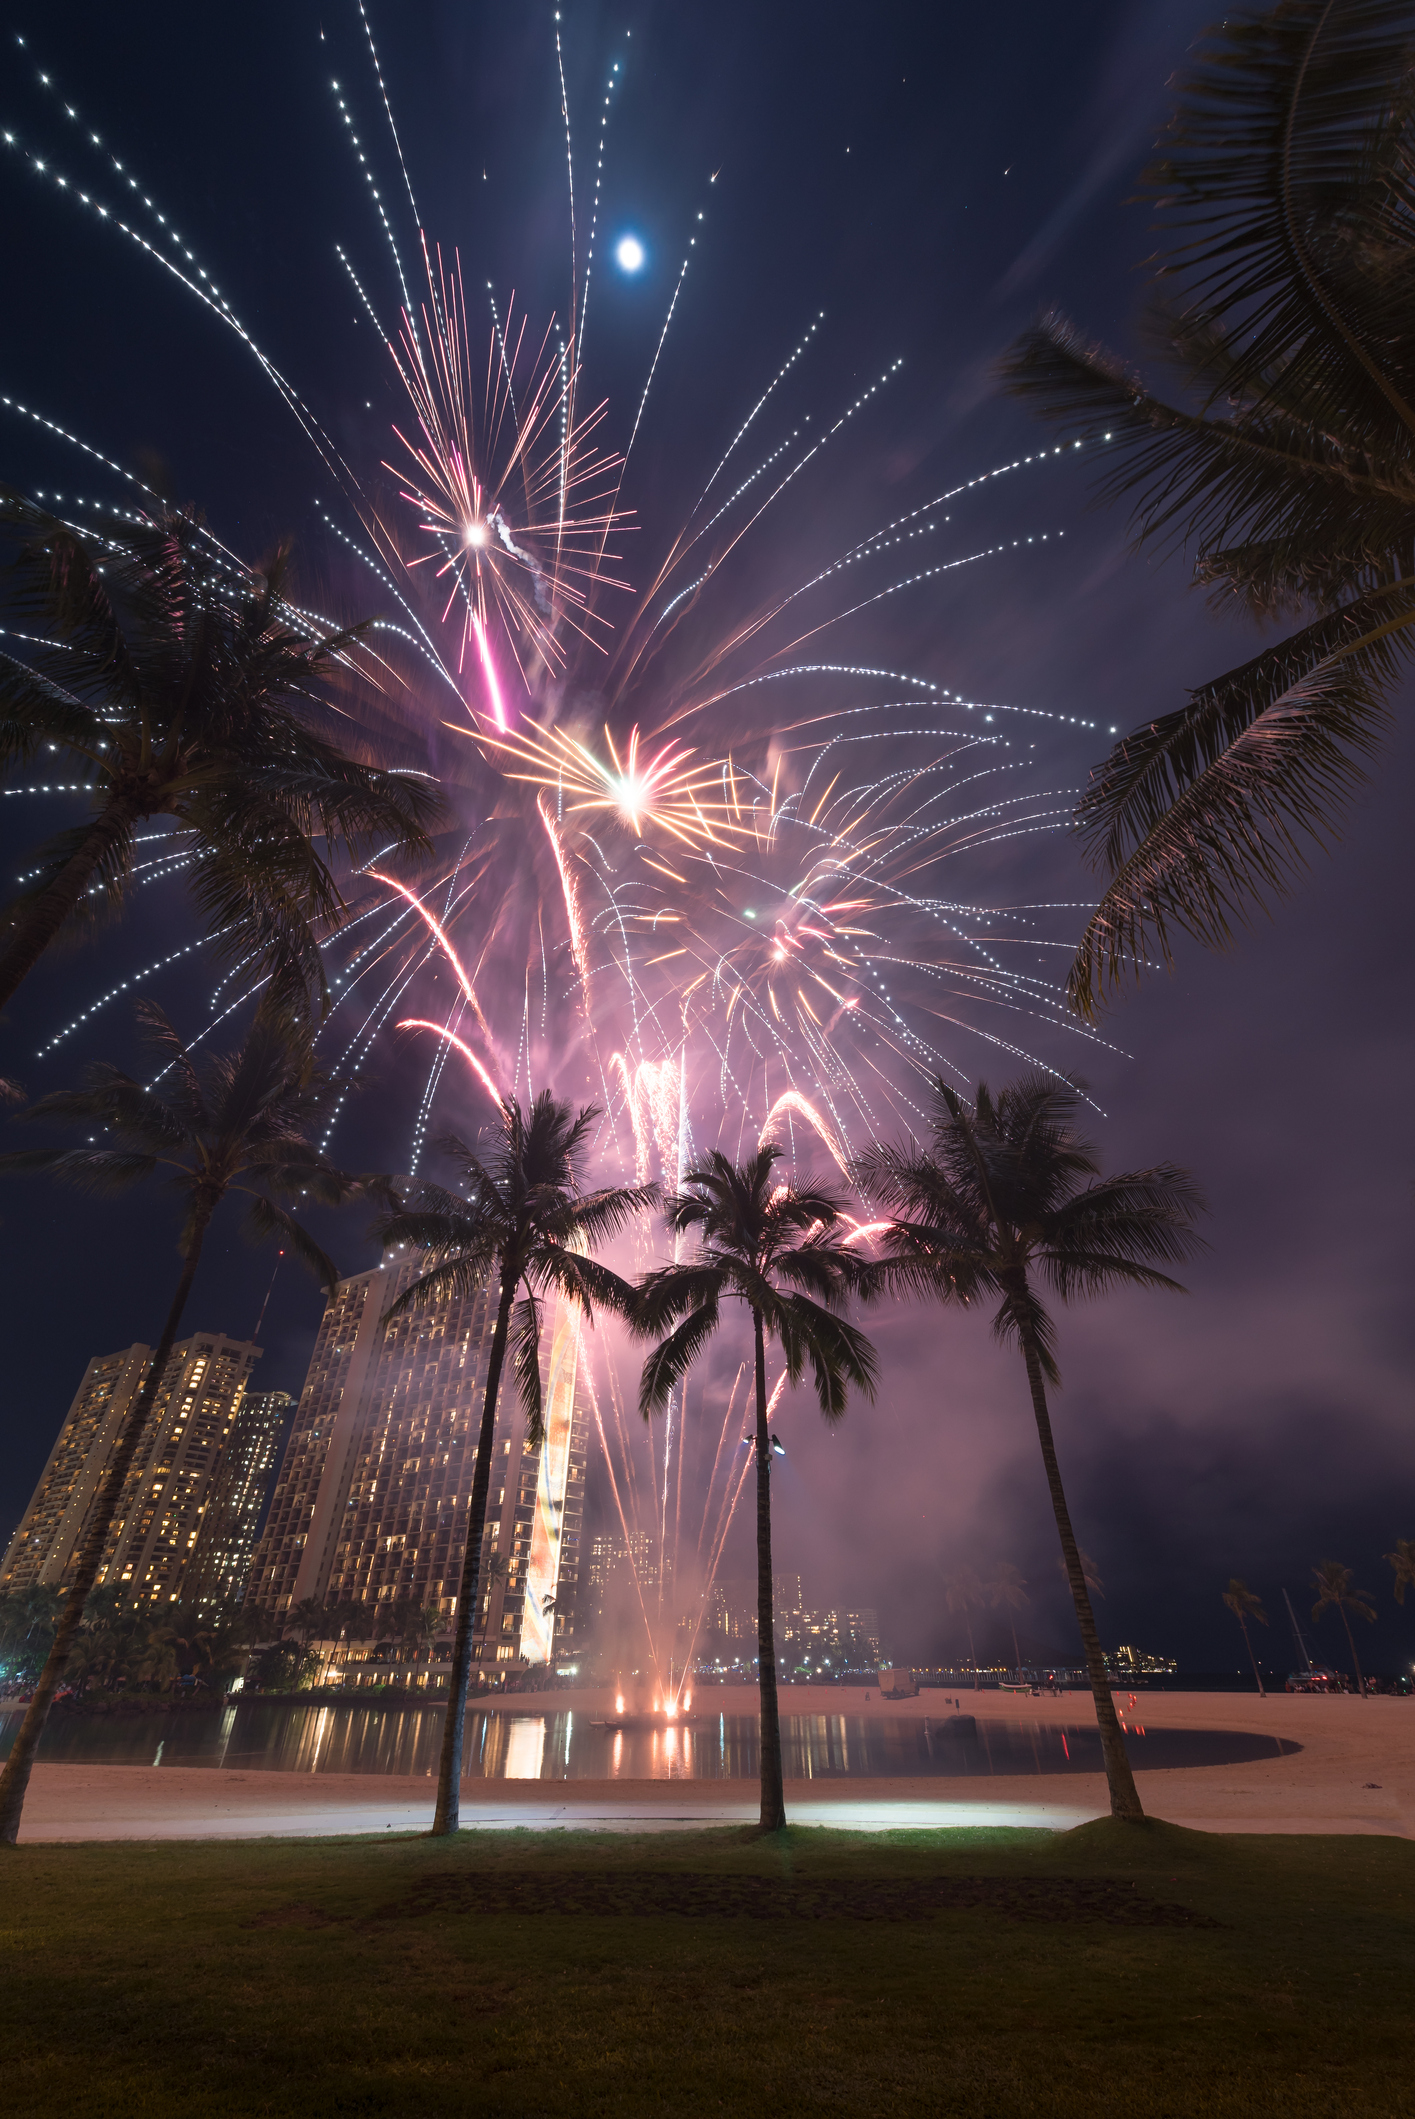 New Year's Eve fireworks framed by palm trees on Waikiki Beach in Honolulu, Hawaii